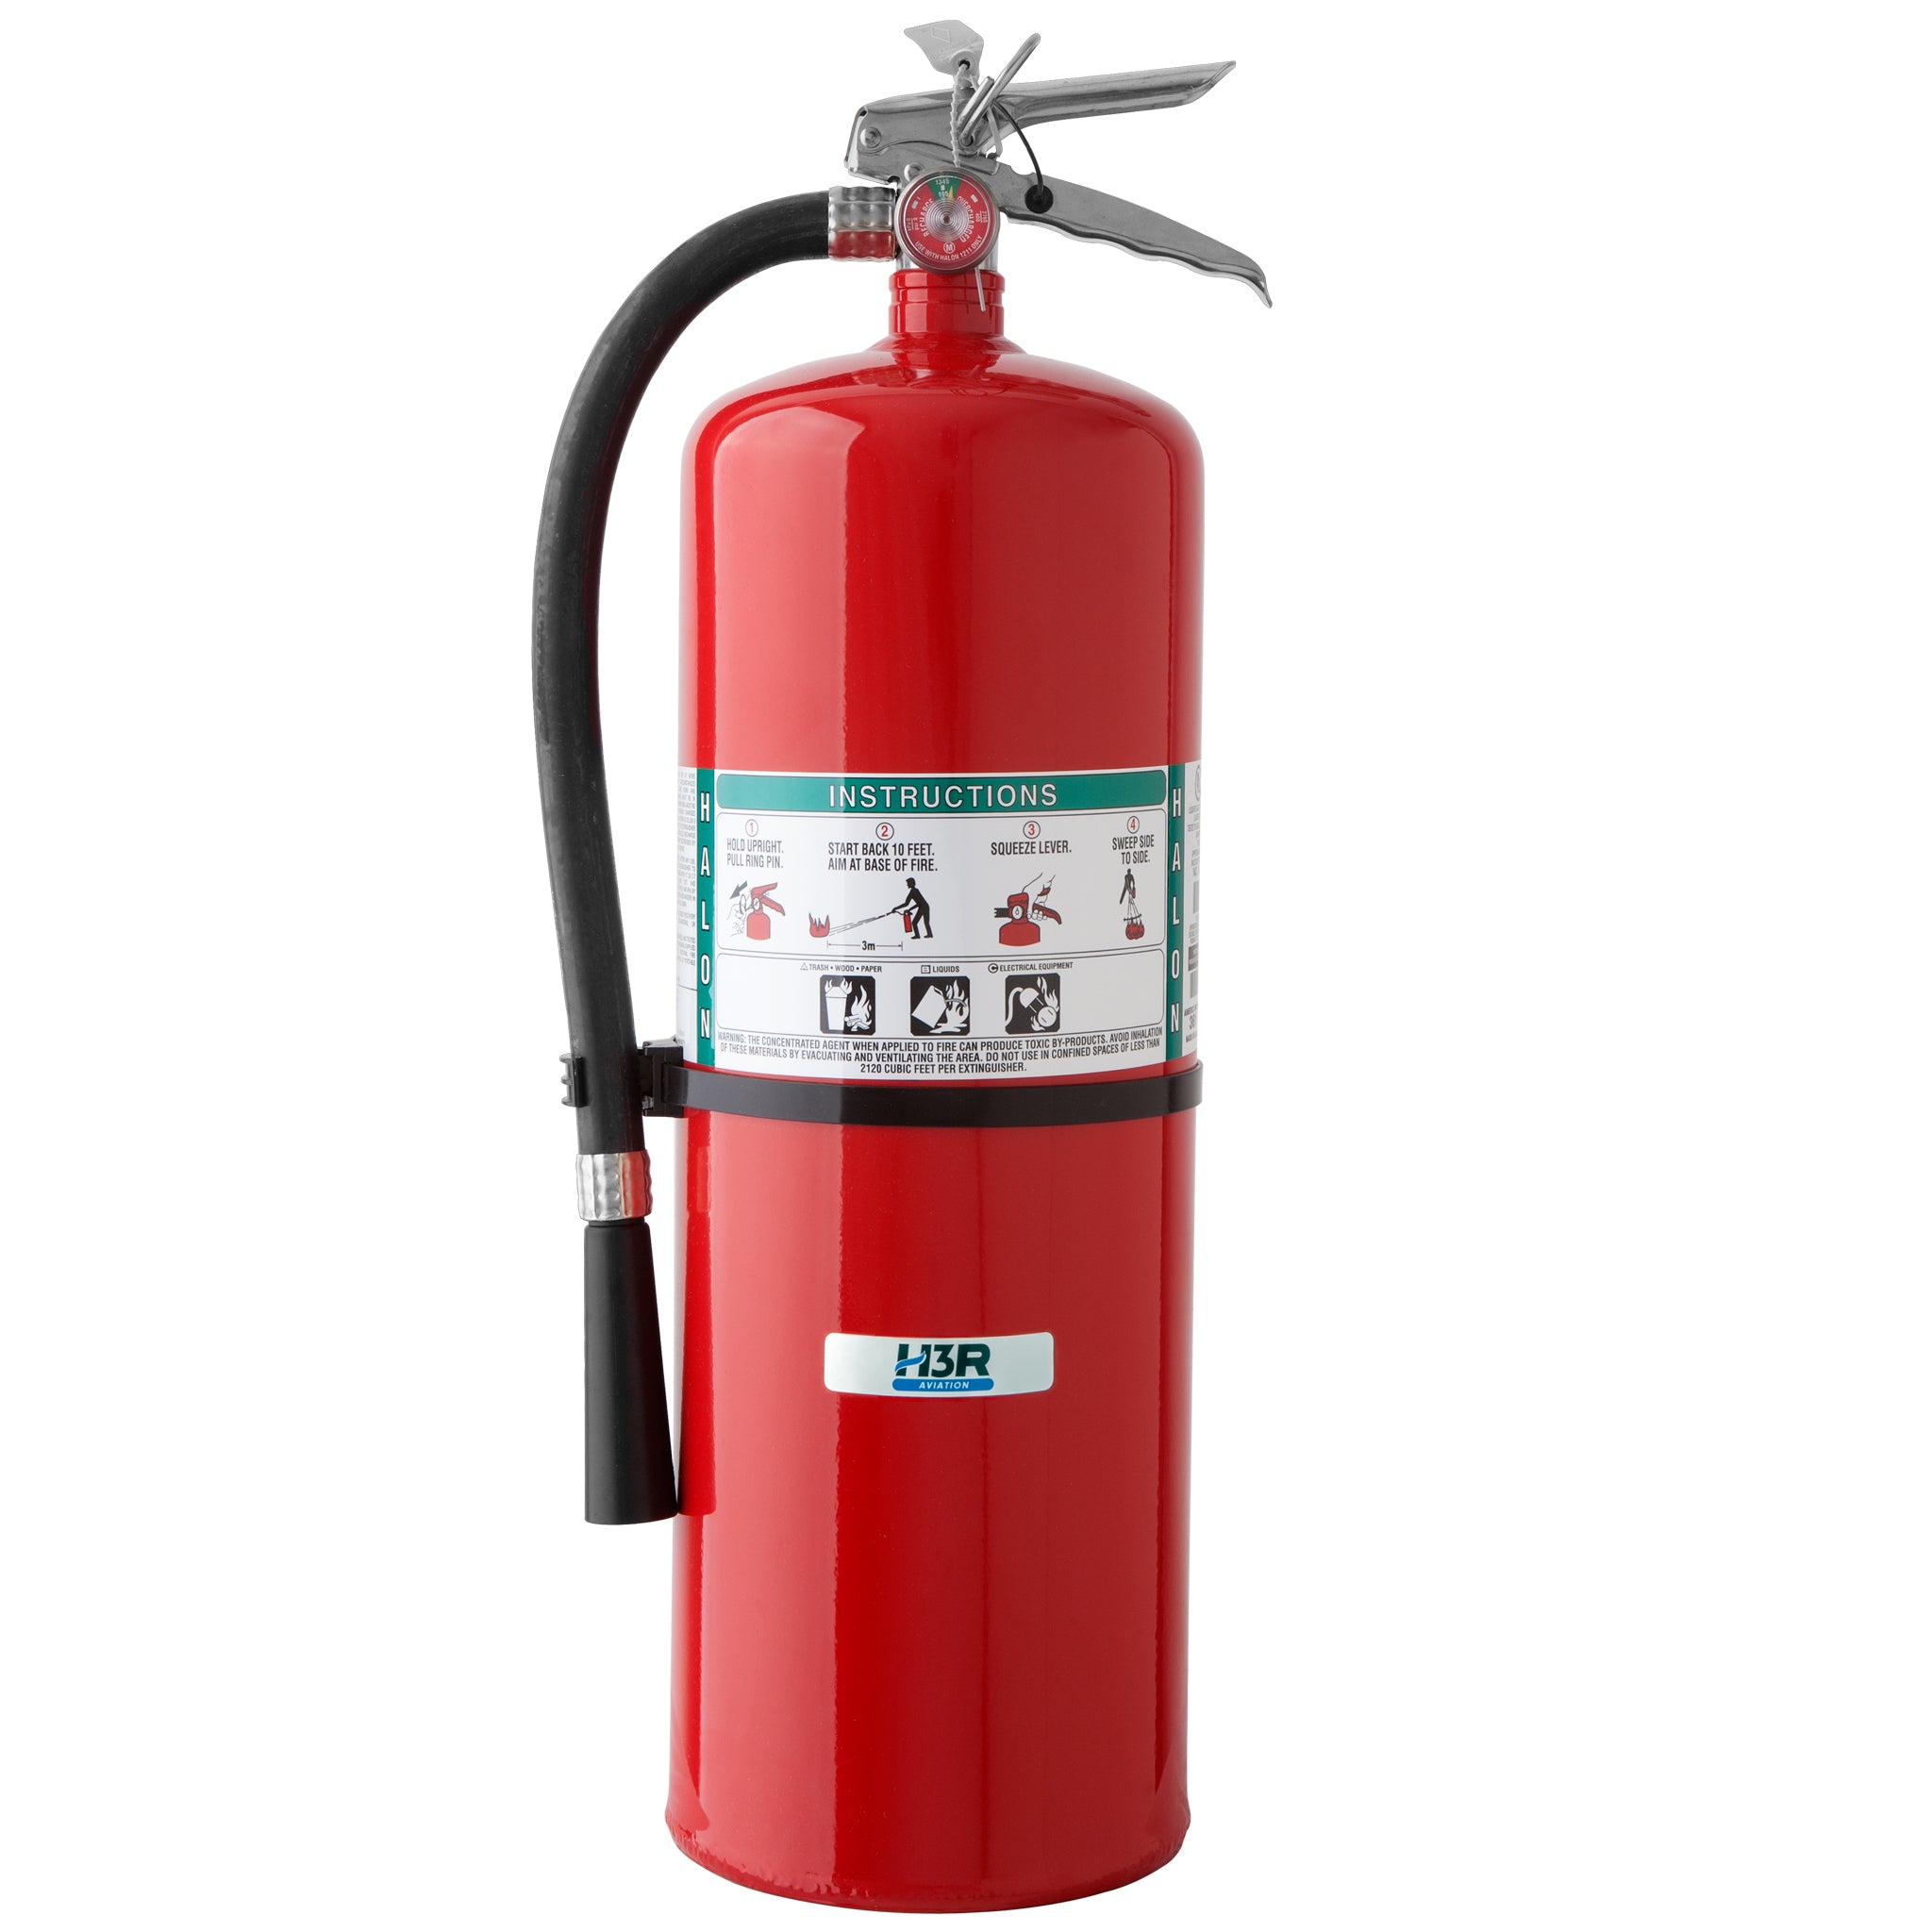 361 - 17.0 lb. Halon Fire Extinguisher